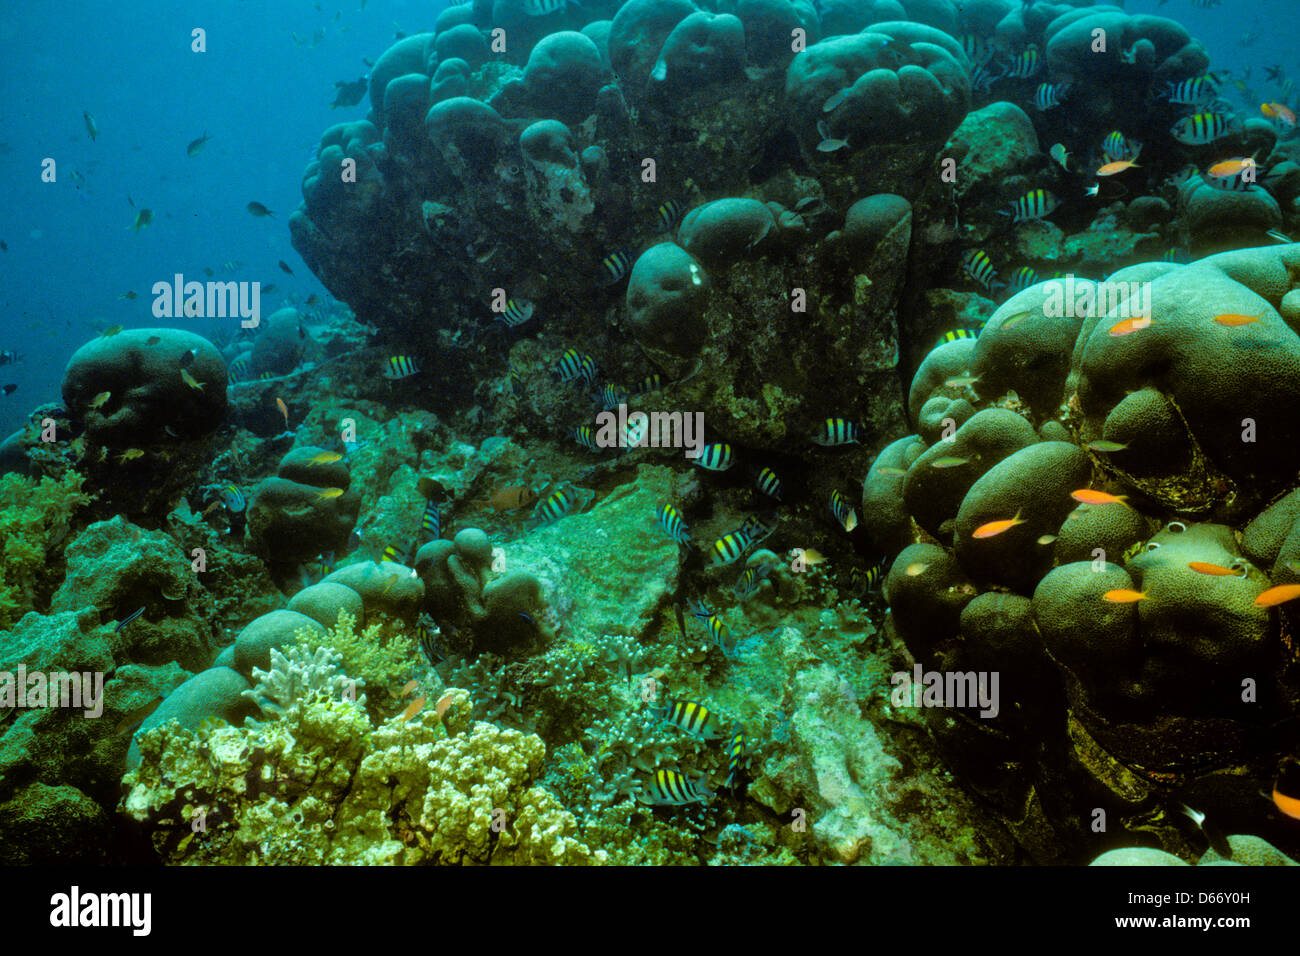 Brain Coral,Pletgyra daedalea,Sipadan Nov 1990 Underwater Slide Conversions,one of the richest marine habitats in the world. Stock Photo